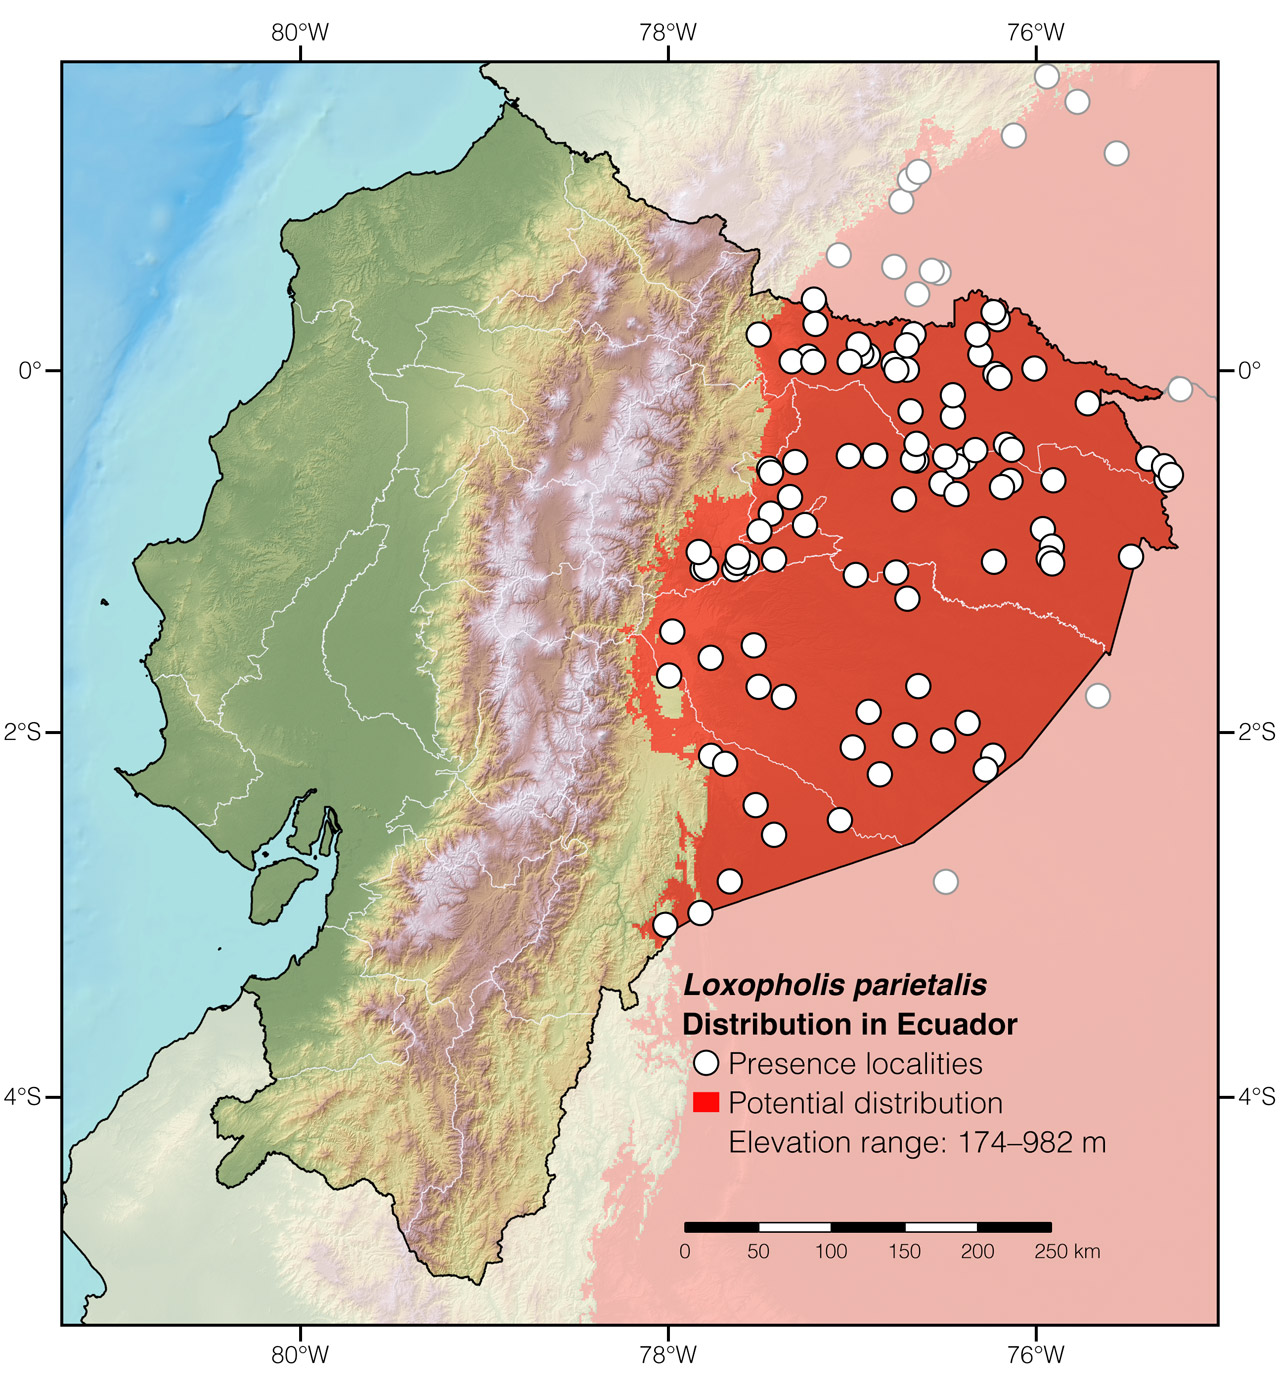 Distribution of Loxopholis parietalis in Ecuador